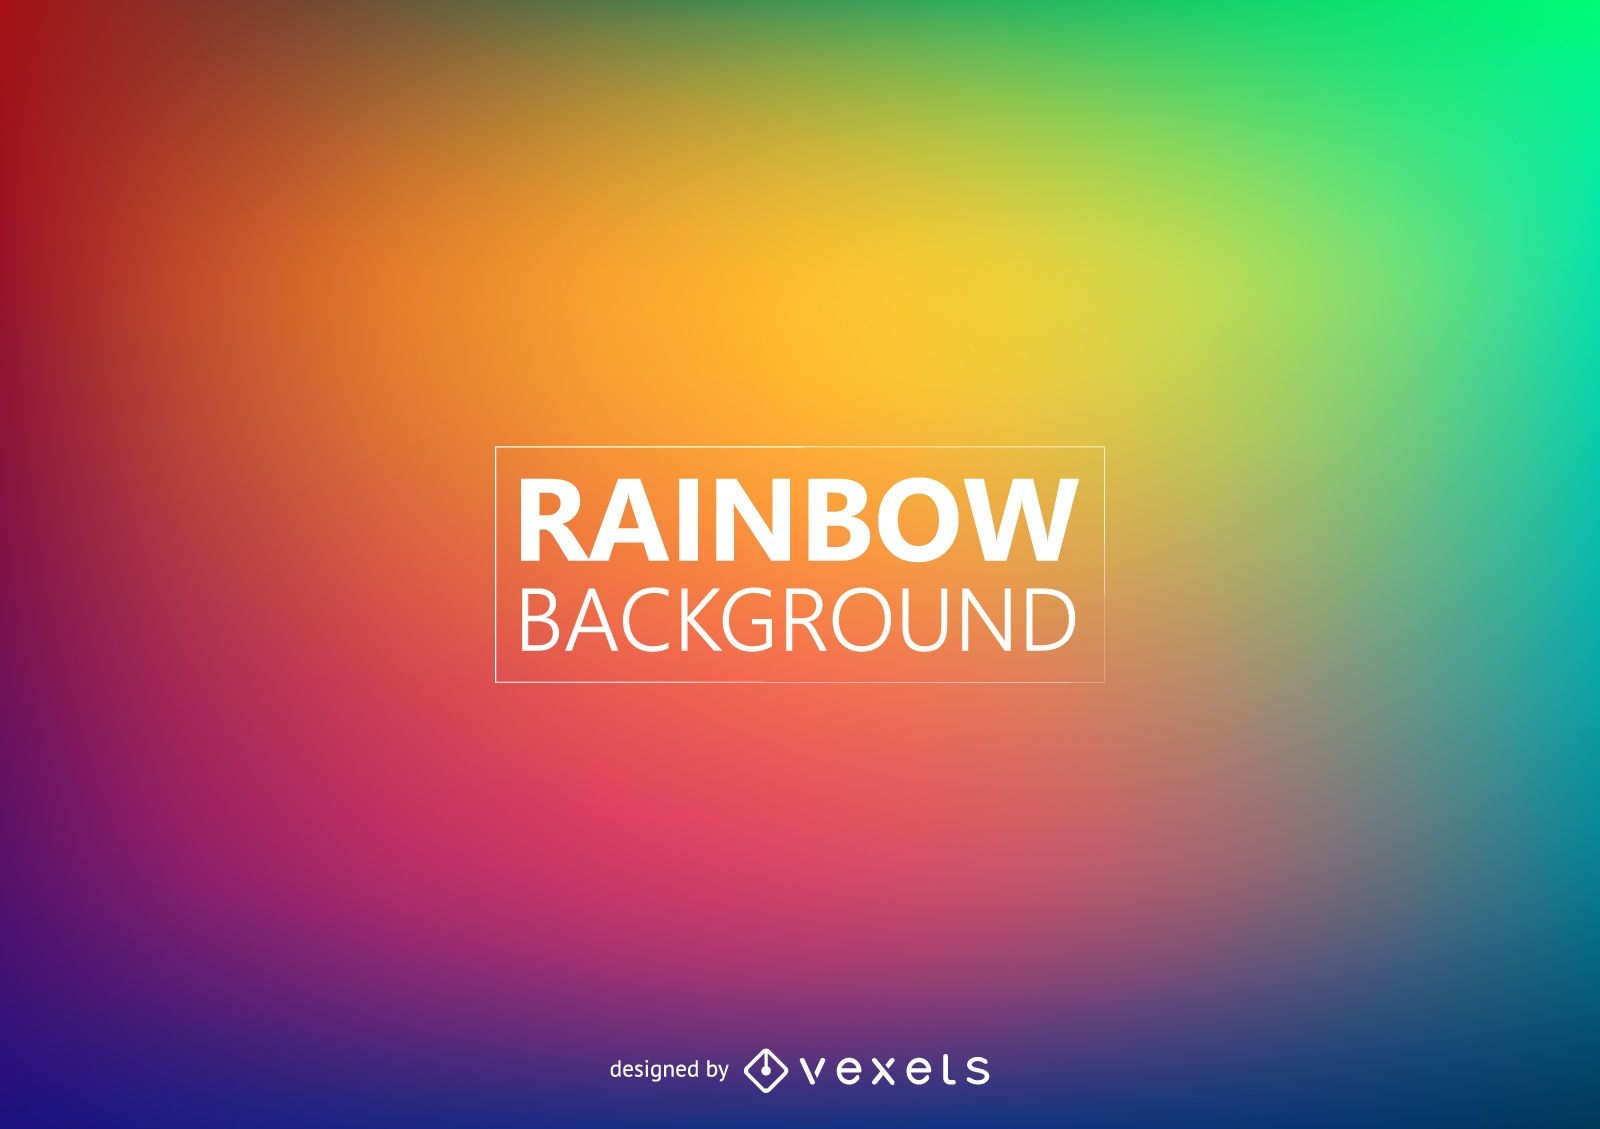 blury rainbow colors